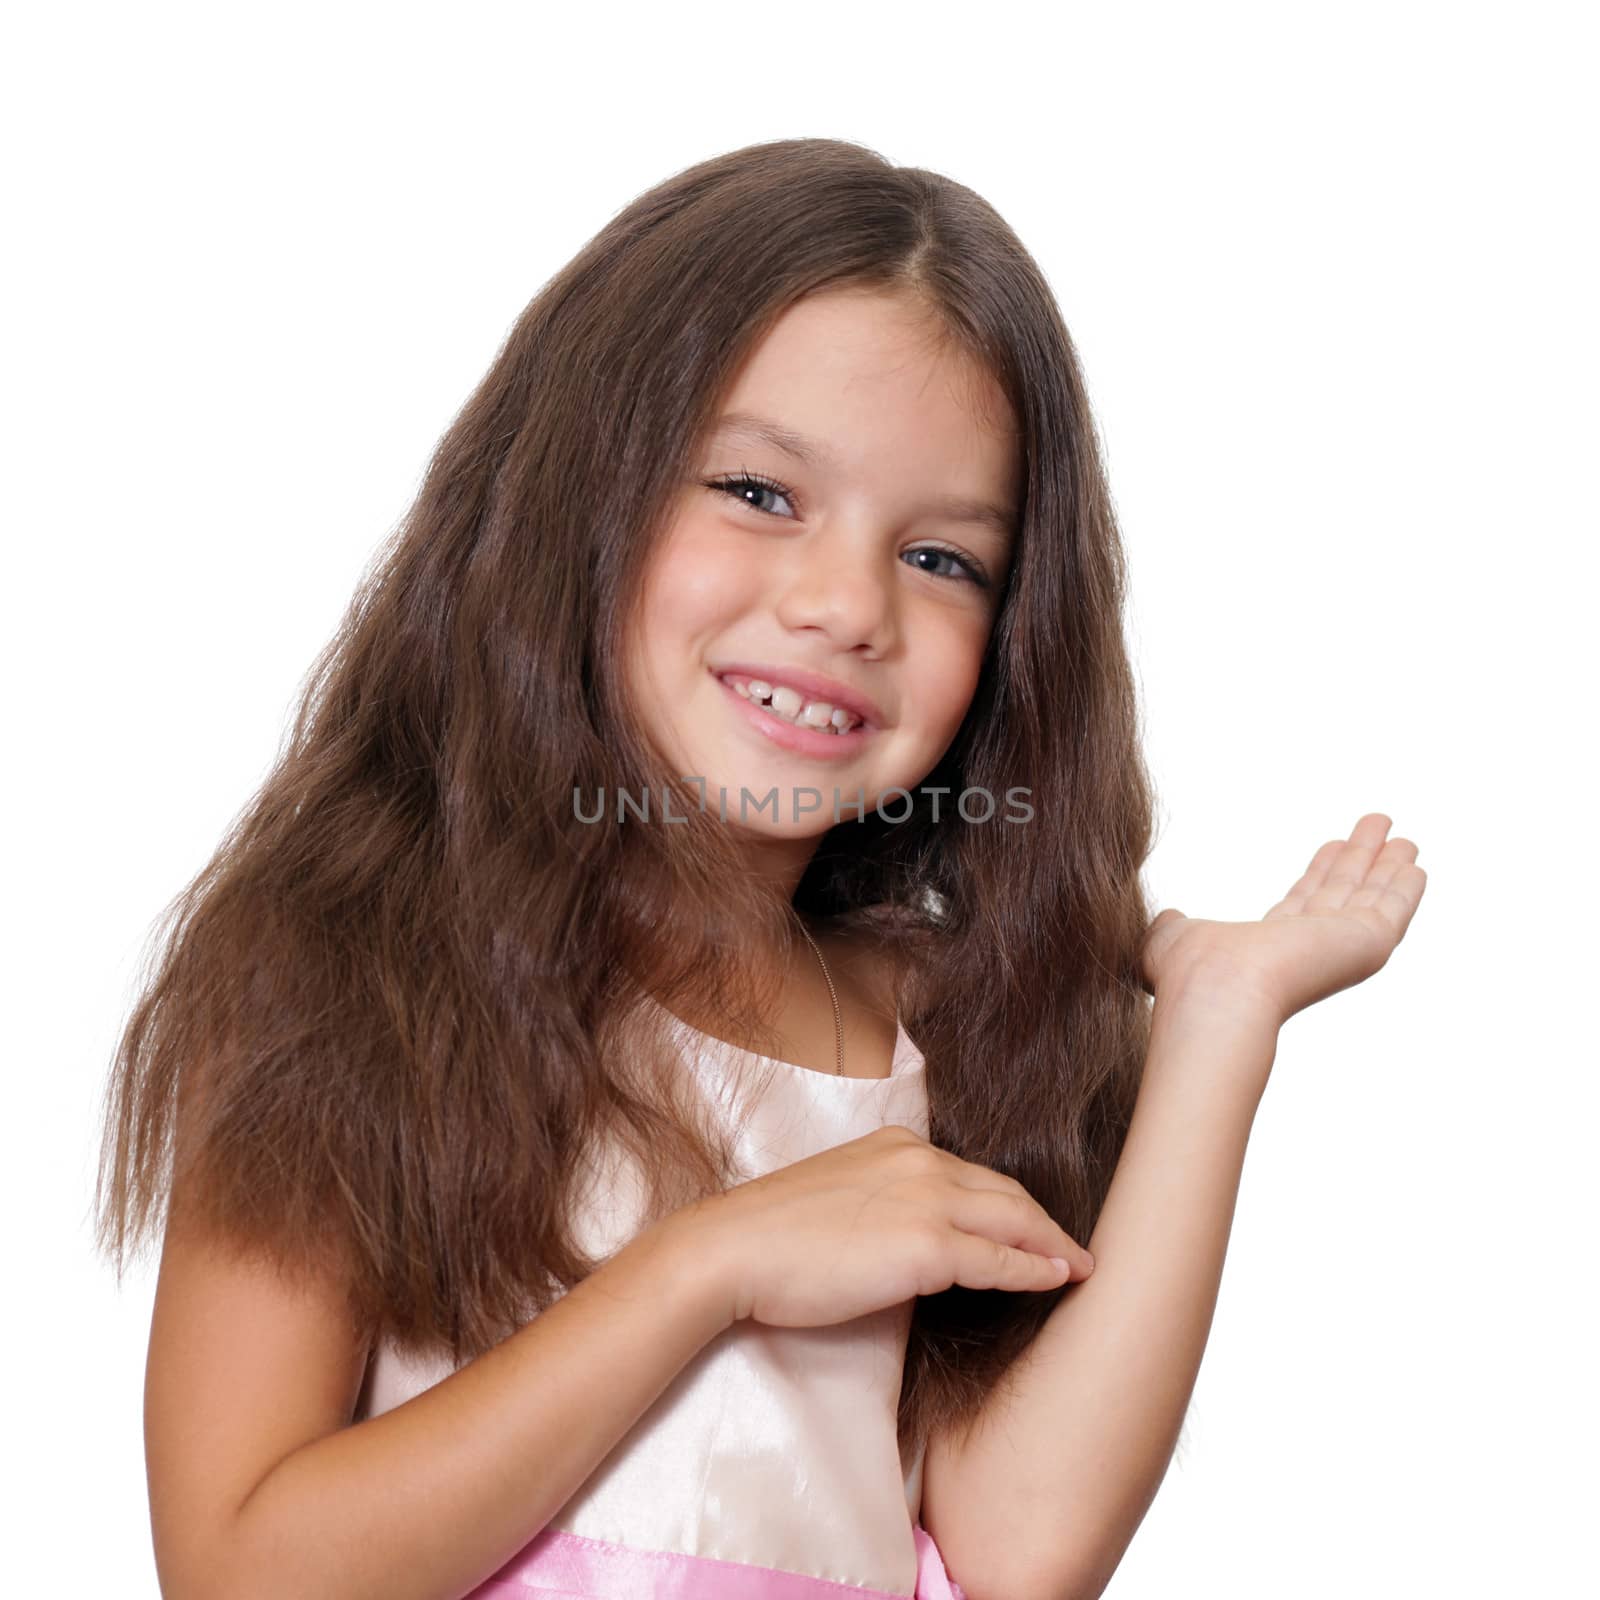 Closeup portrait of pretty little girl by andersonrise